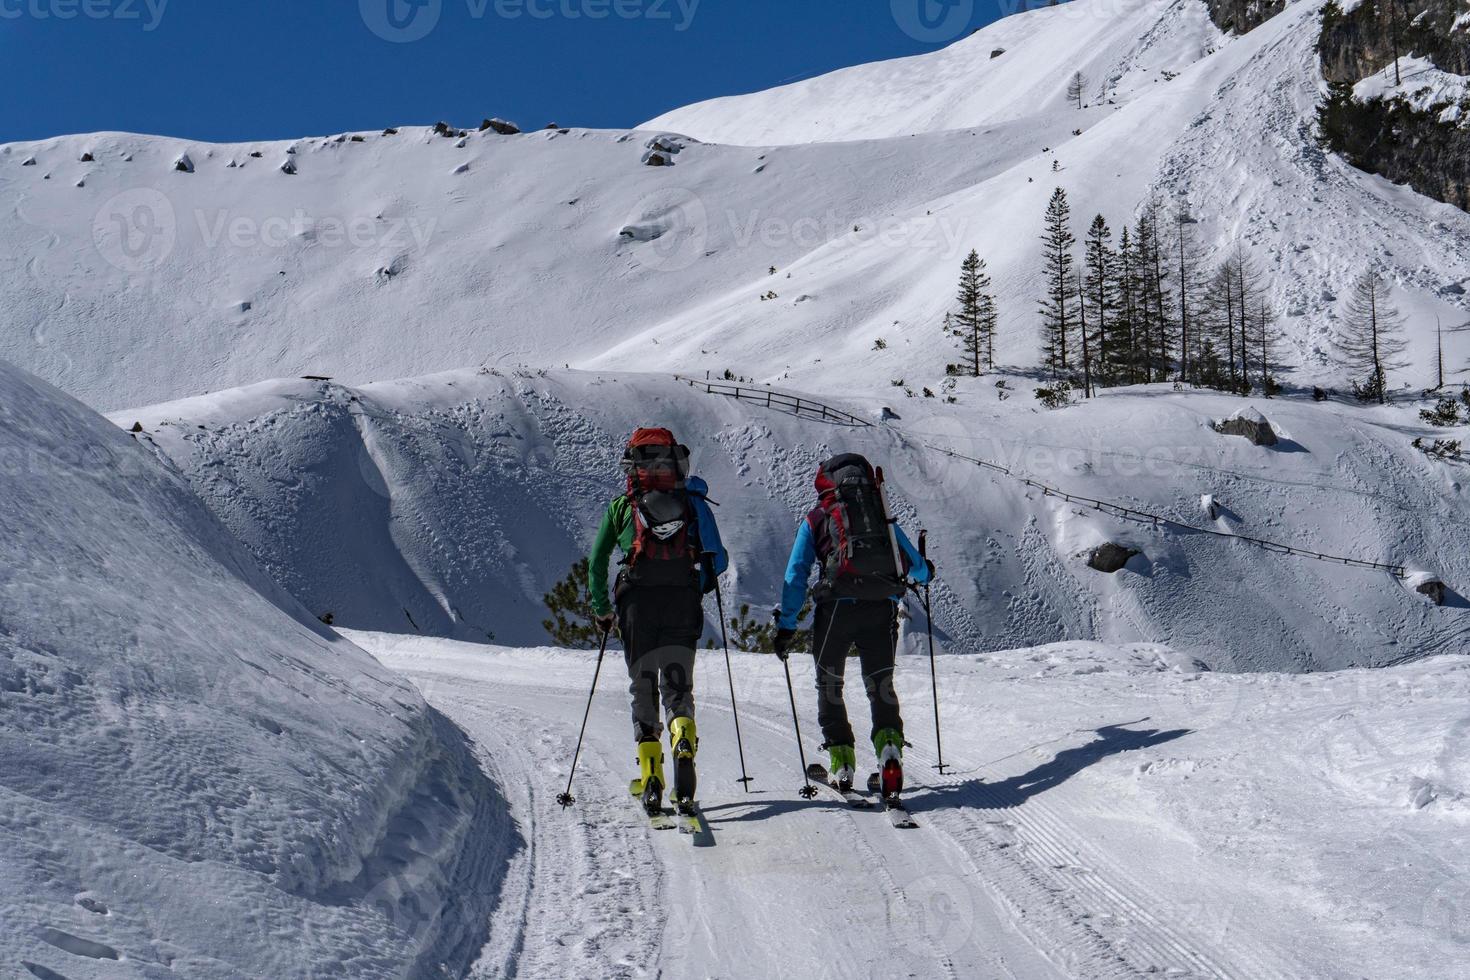 Skin-Skifahrer im Dolomiten-Schneepanorama foto